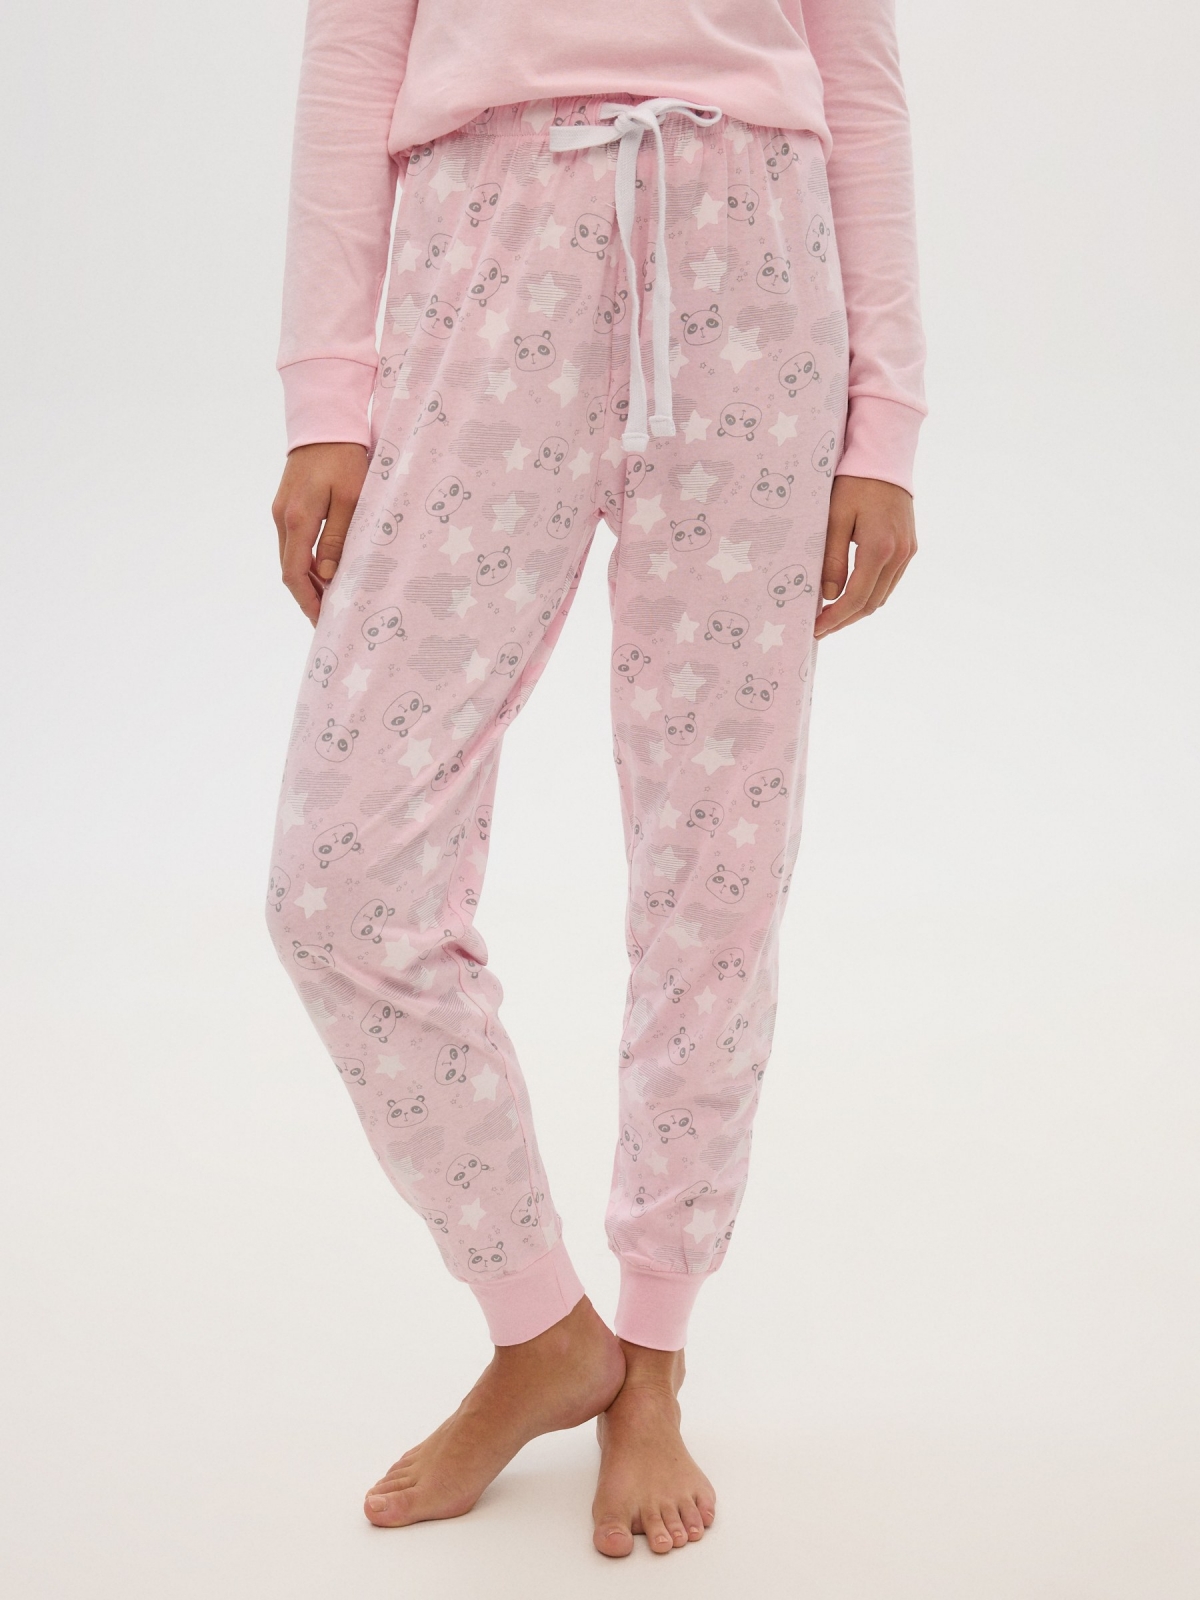 Panda pijama rosa rosa claro vista detalhe